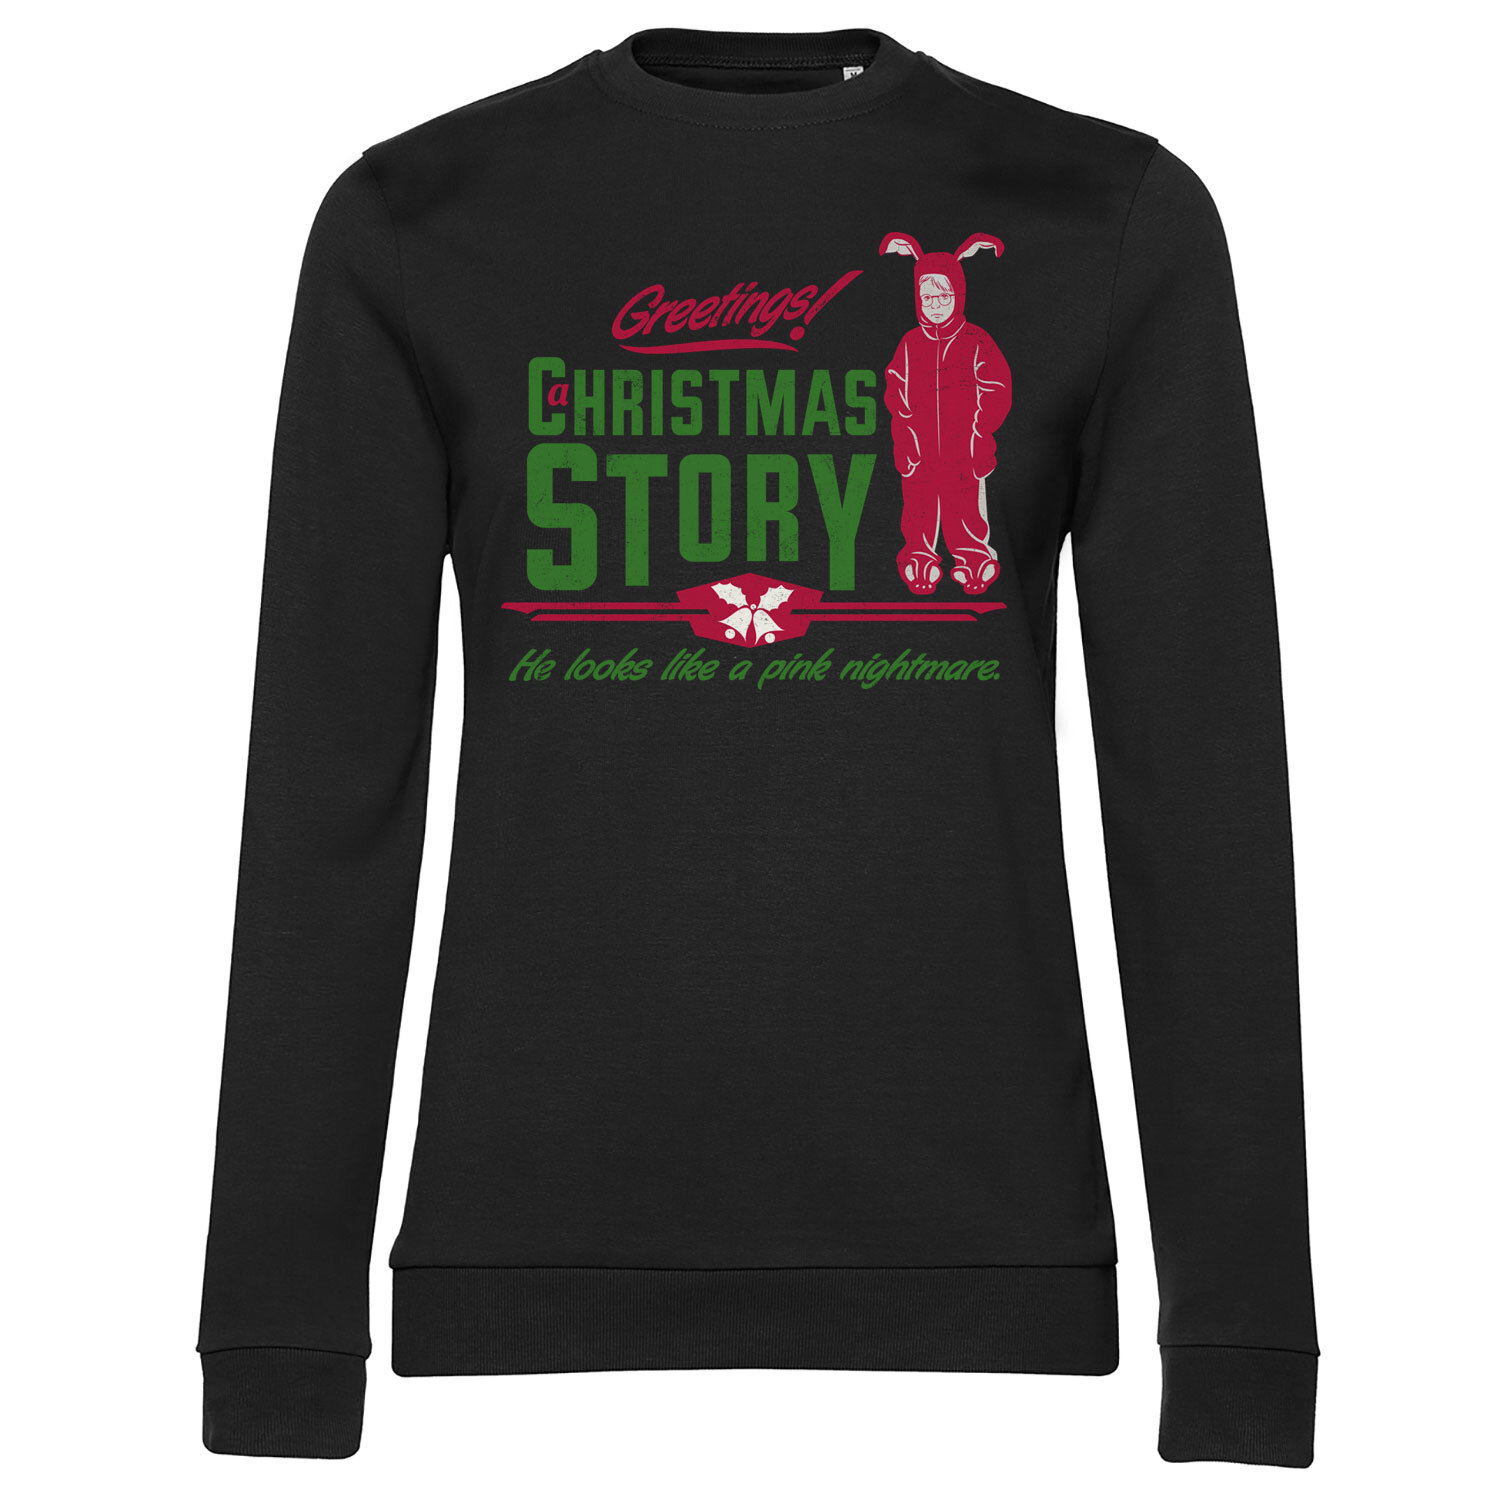 A Christmas Story - Pink Nightmare Girly Sweatshirt